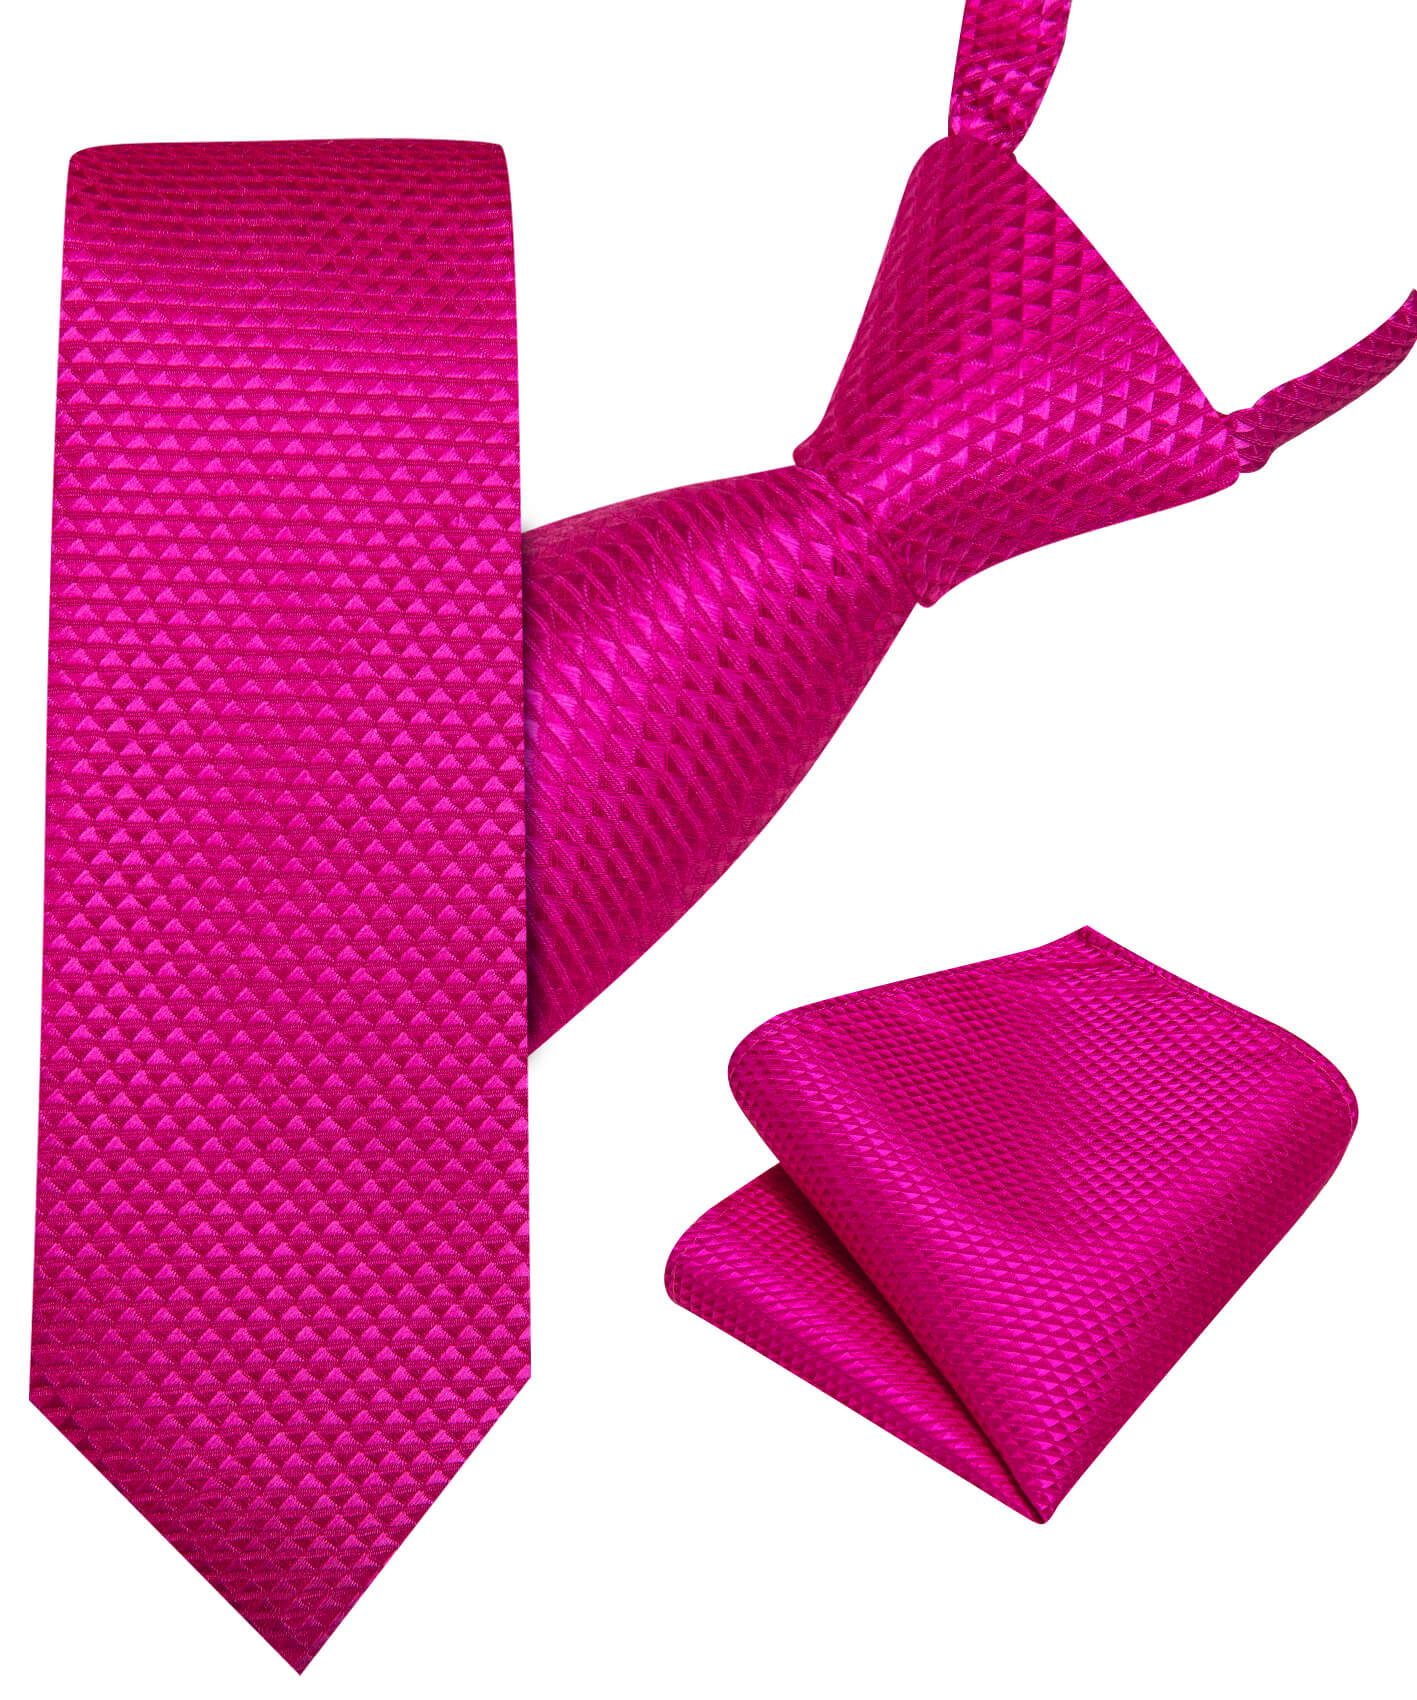  Rose Pink Solid Children's Tie